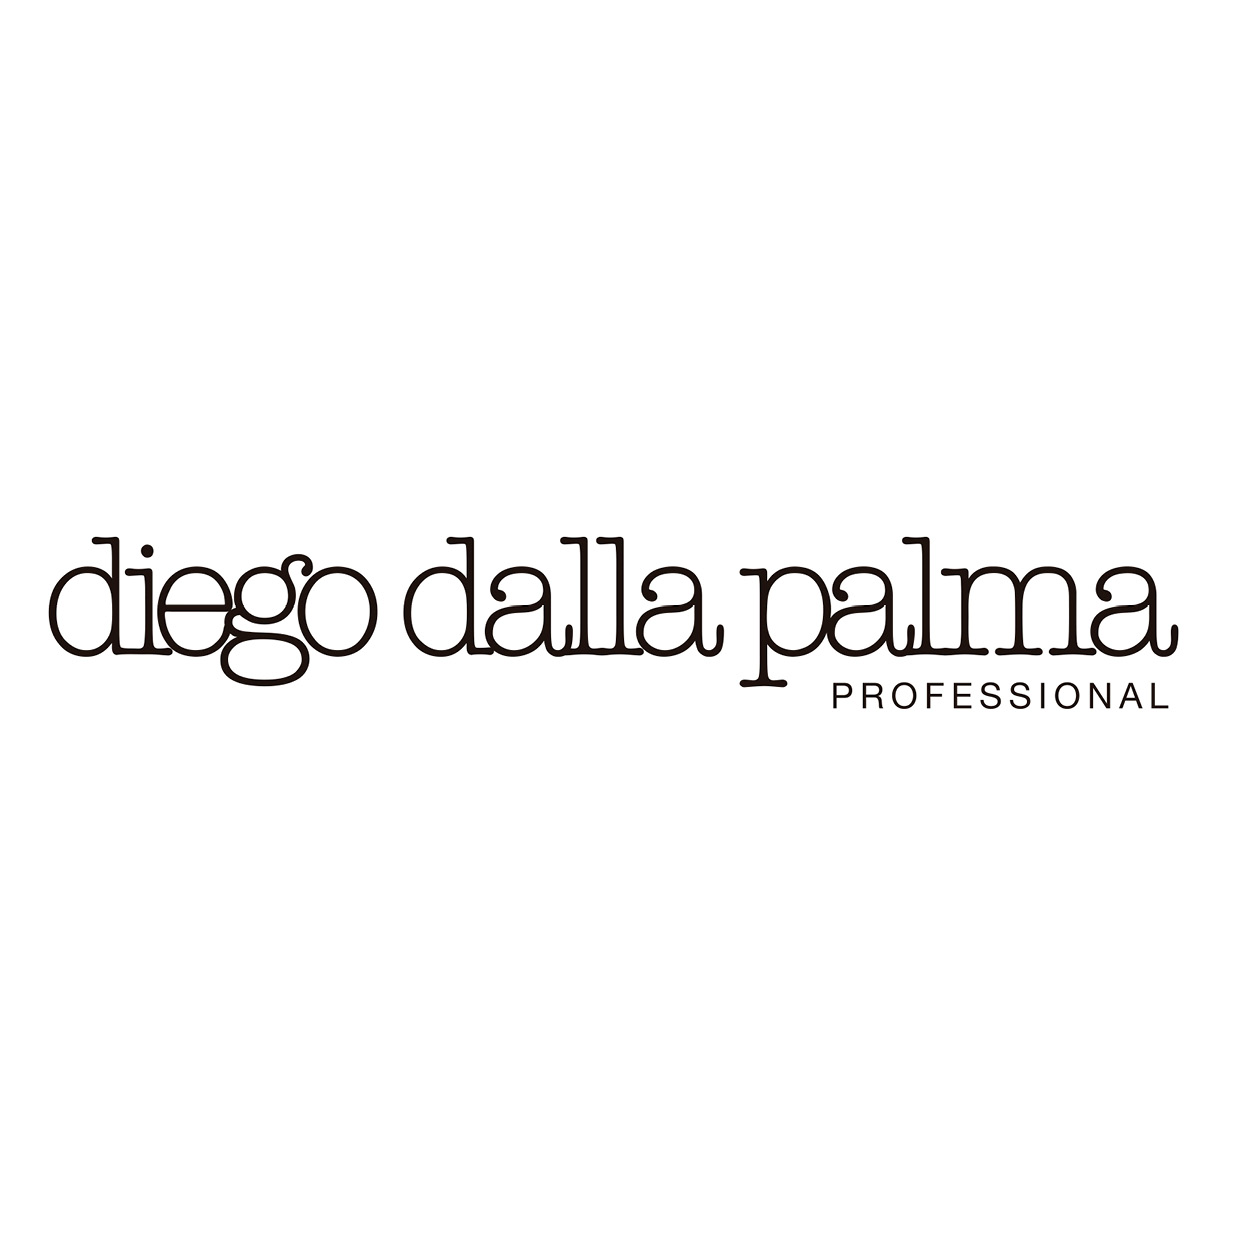 Diego Dalla Palma blanco_300